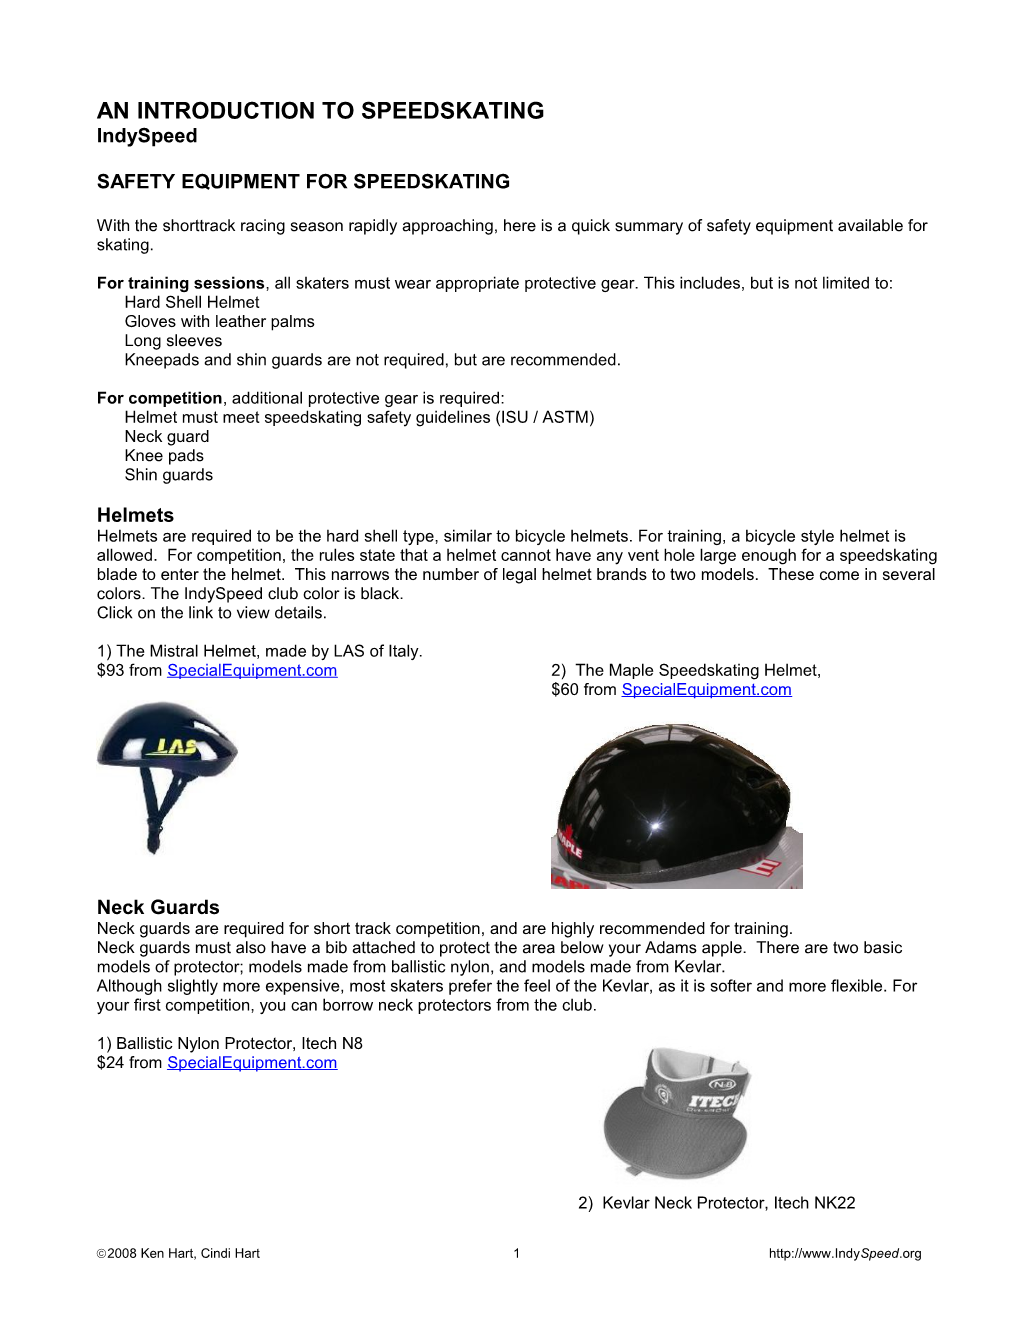 Safety Equipment for Speedskating